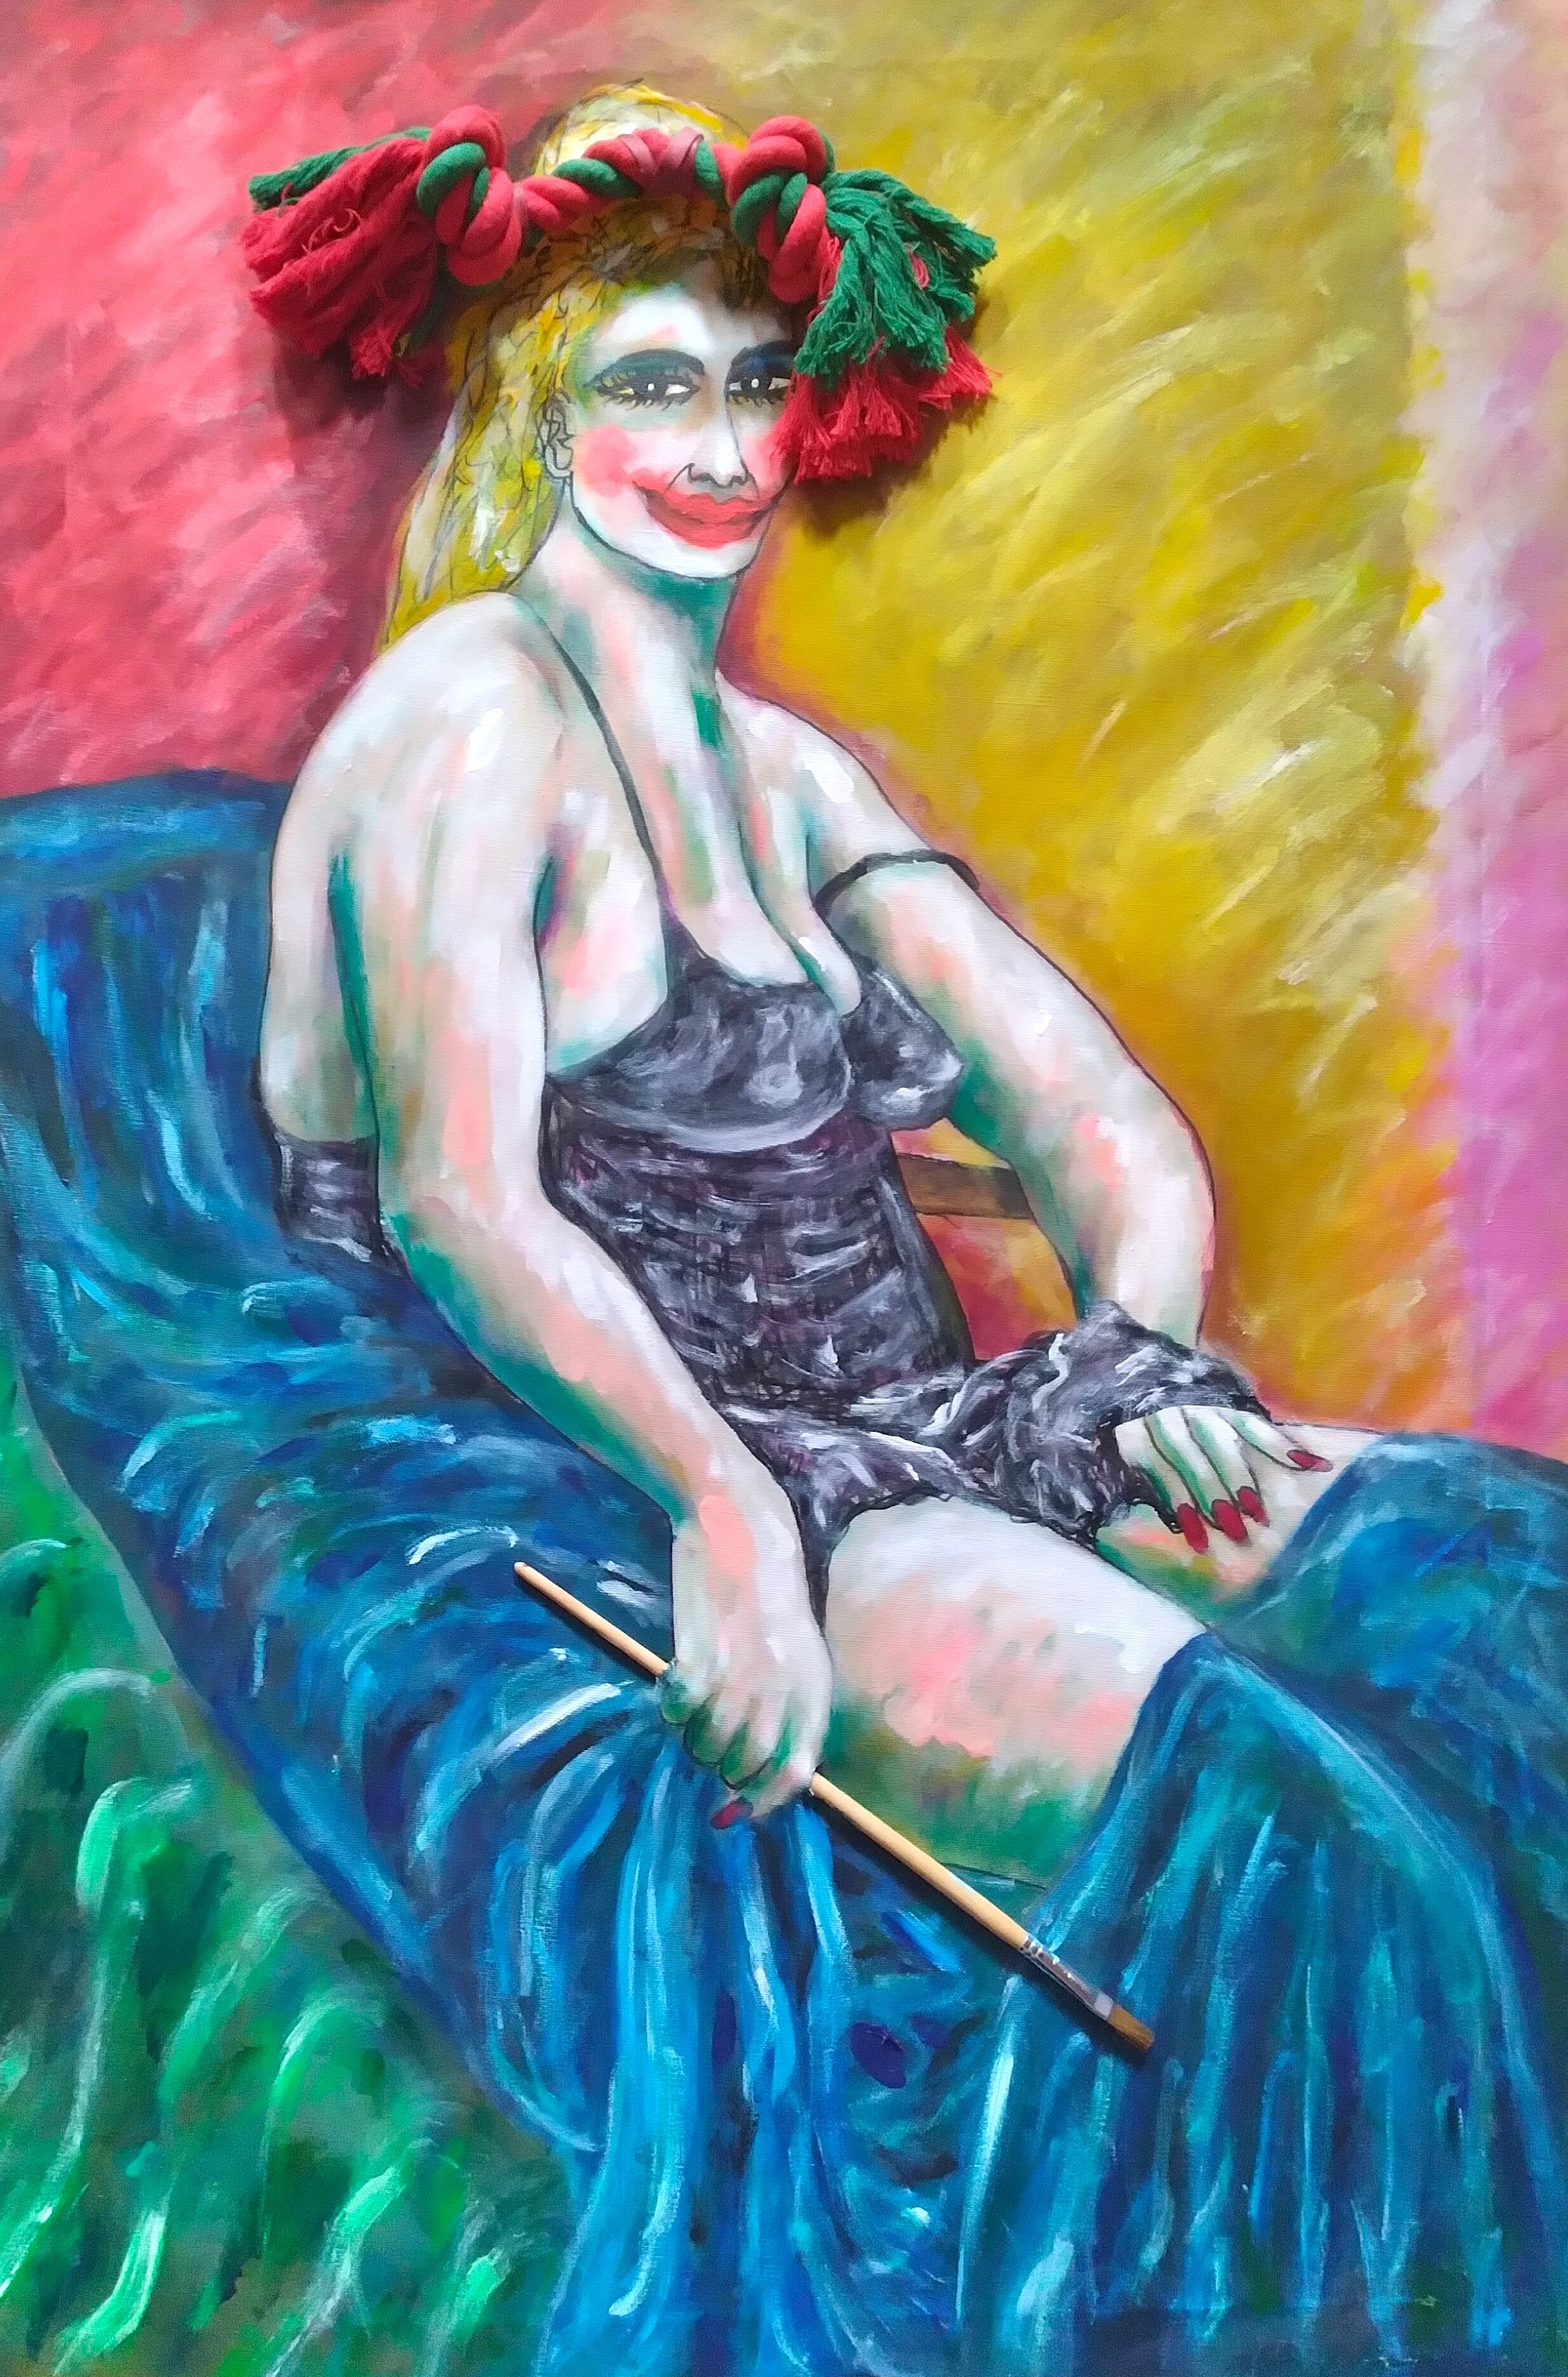 The Joker, 2020. Oil, acrylic, brush, rope on canvas. 36" x 24".